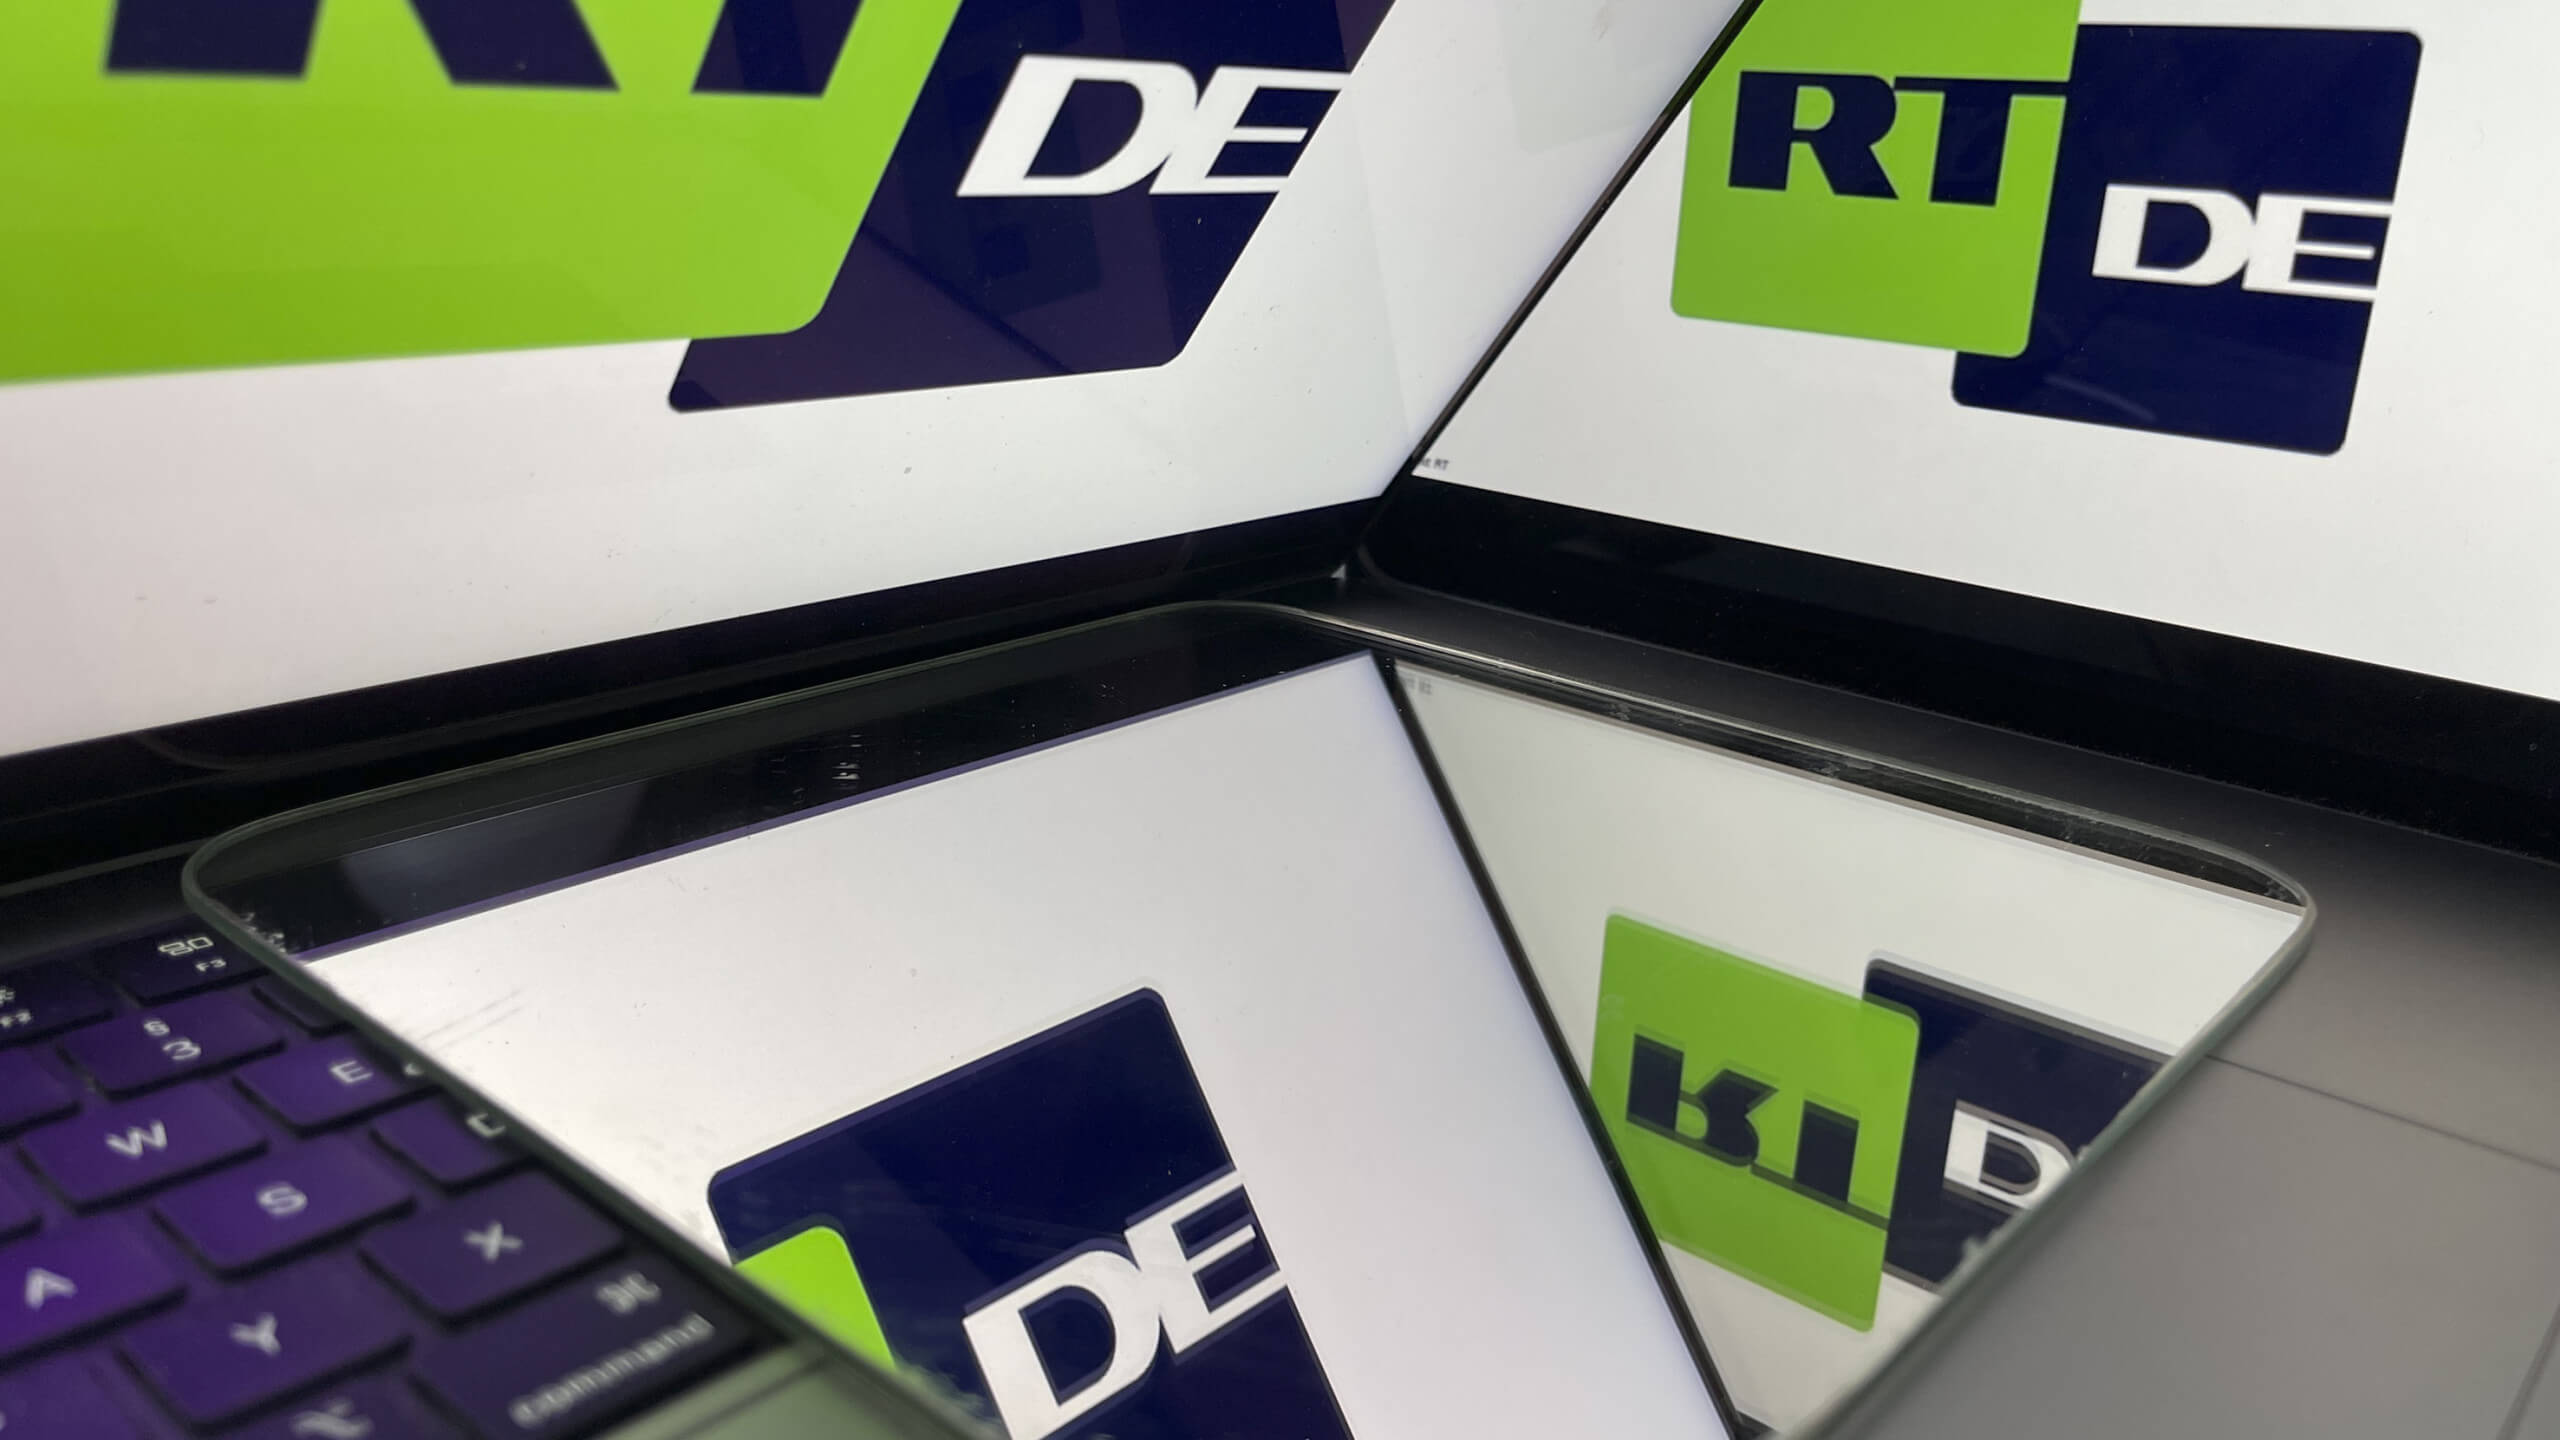 RTDE logo on several screens